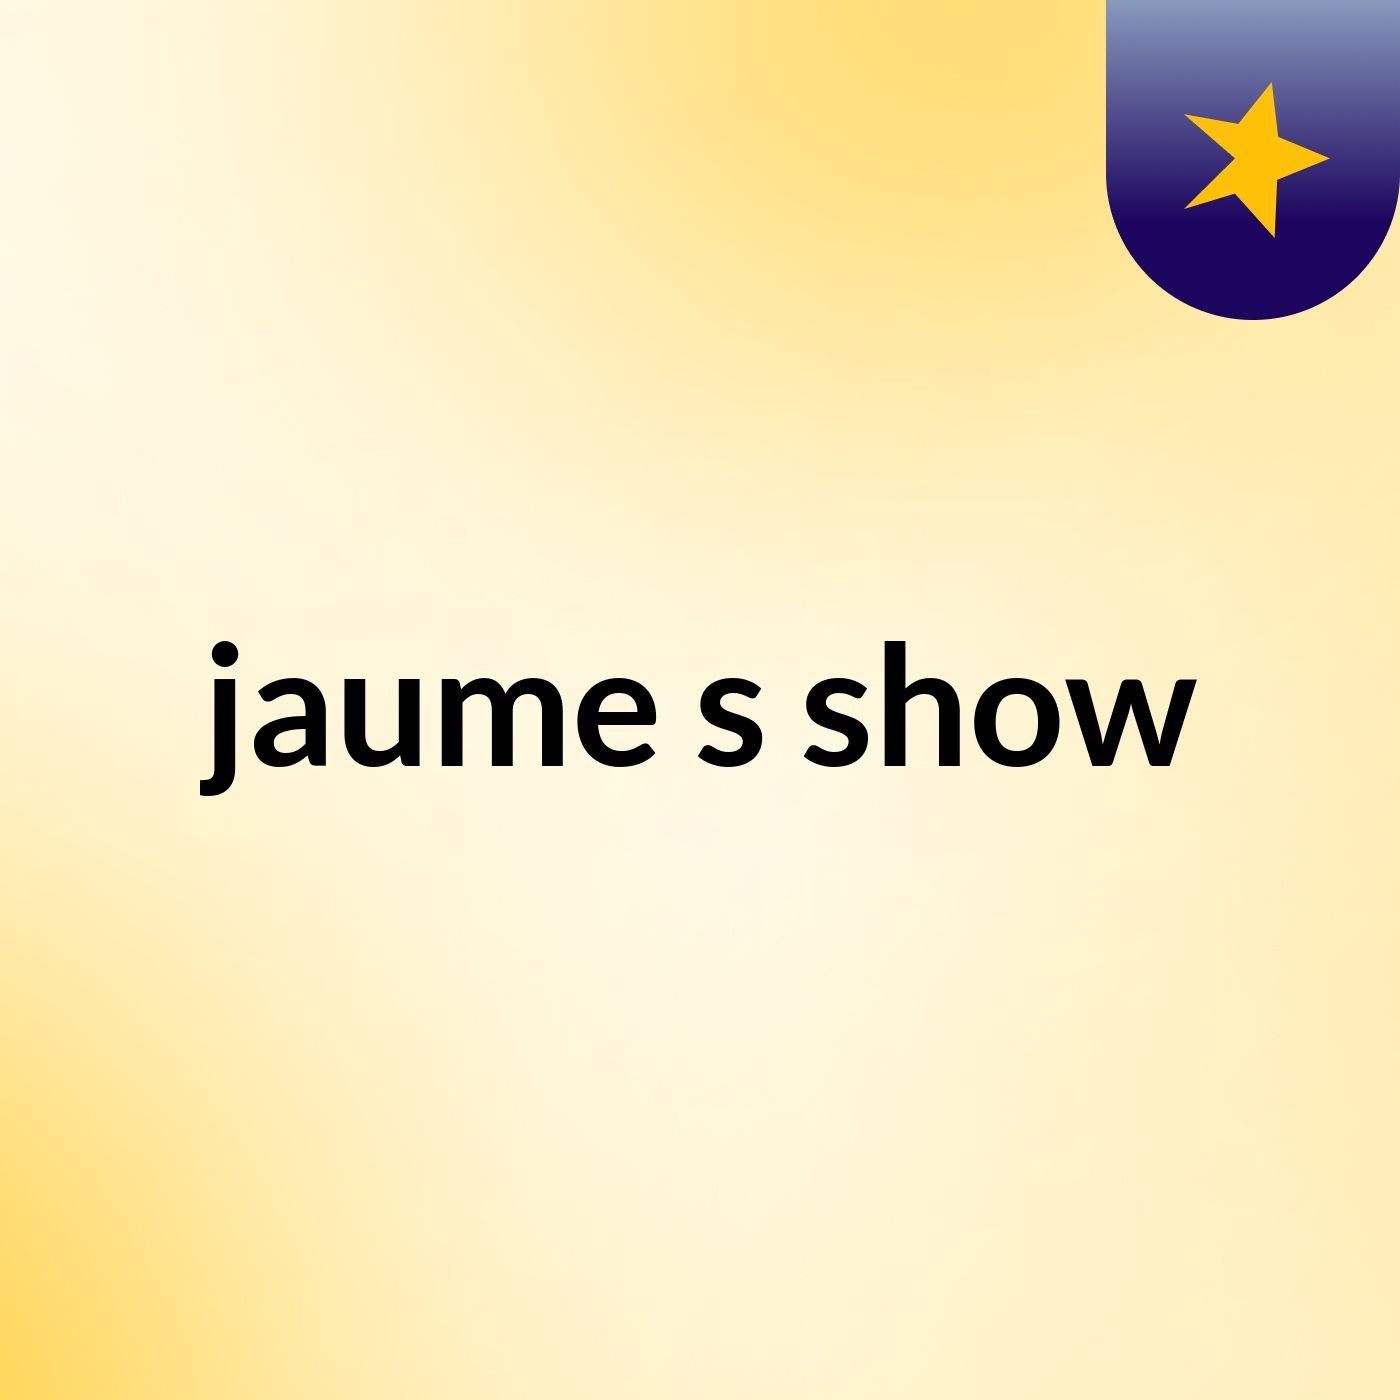 jaume's show